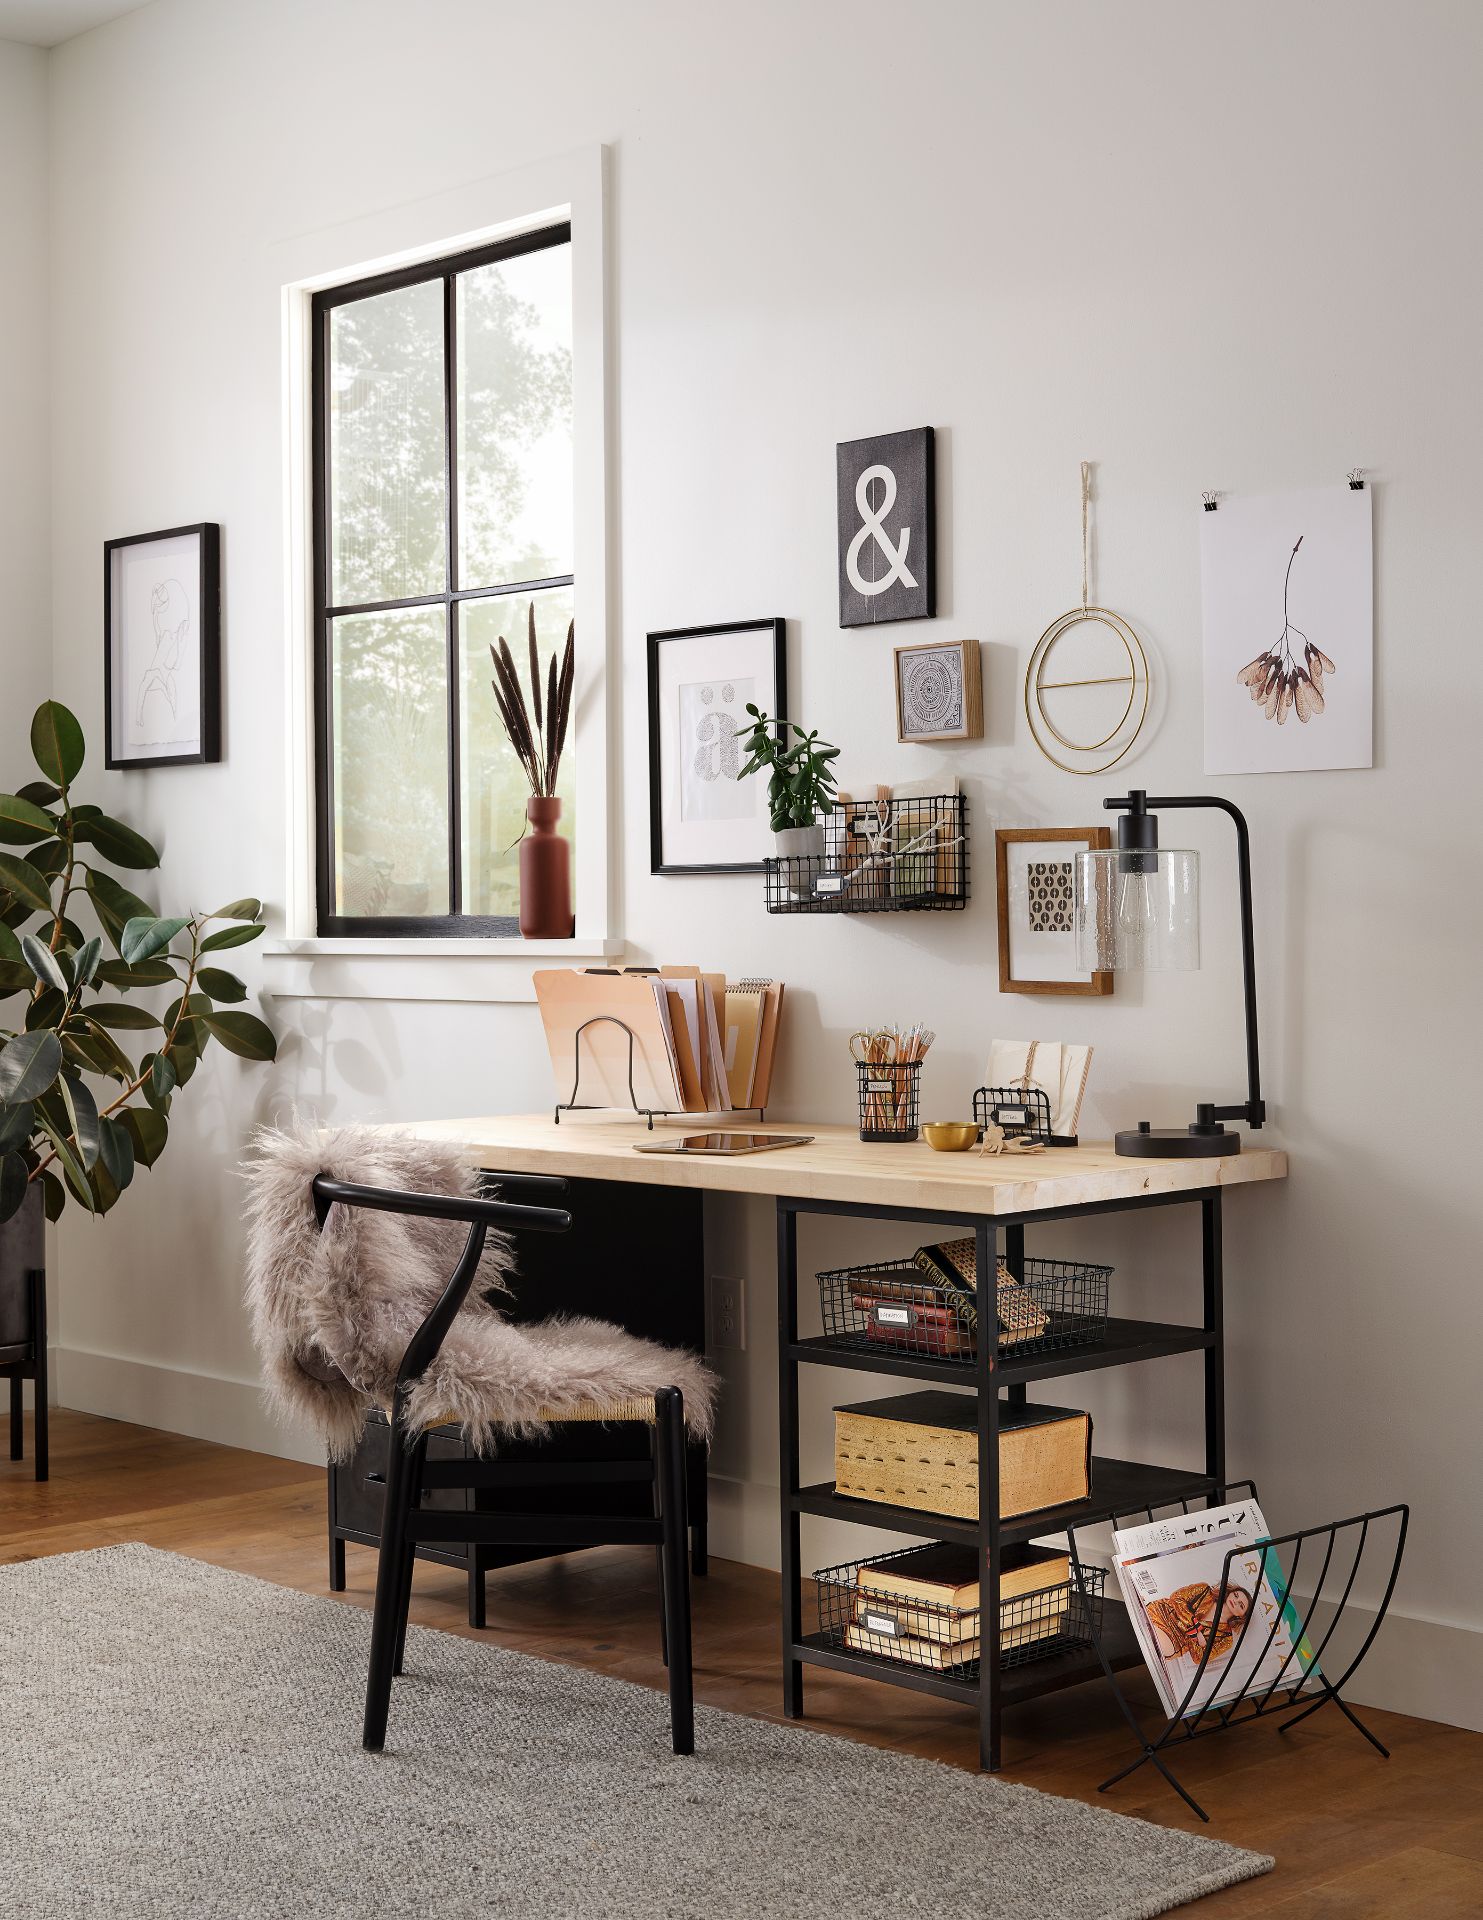 Home & Living :: Office & Organization :: Desk Accessories